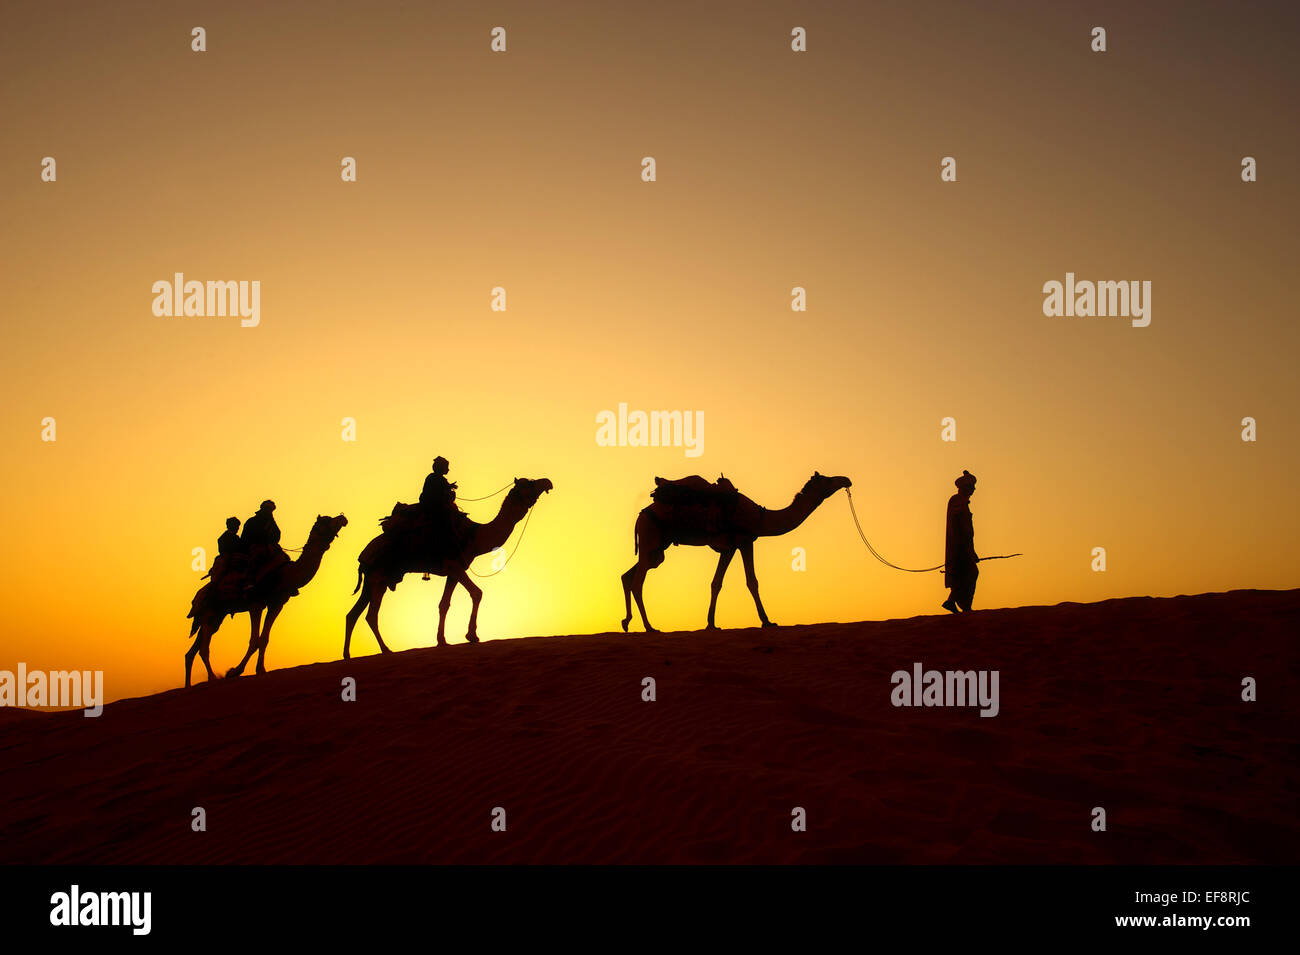 Camel train walking in That Desert, Rajasthan, India Stock Photo